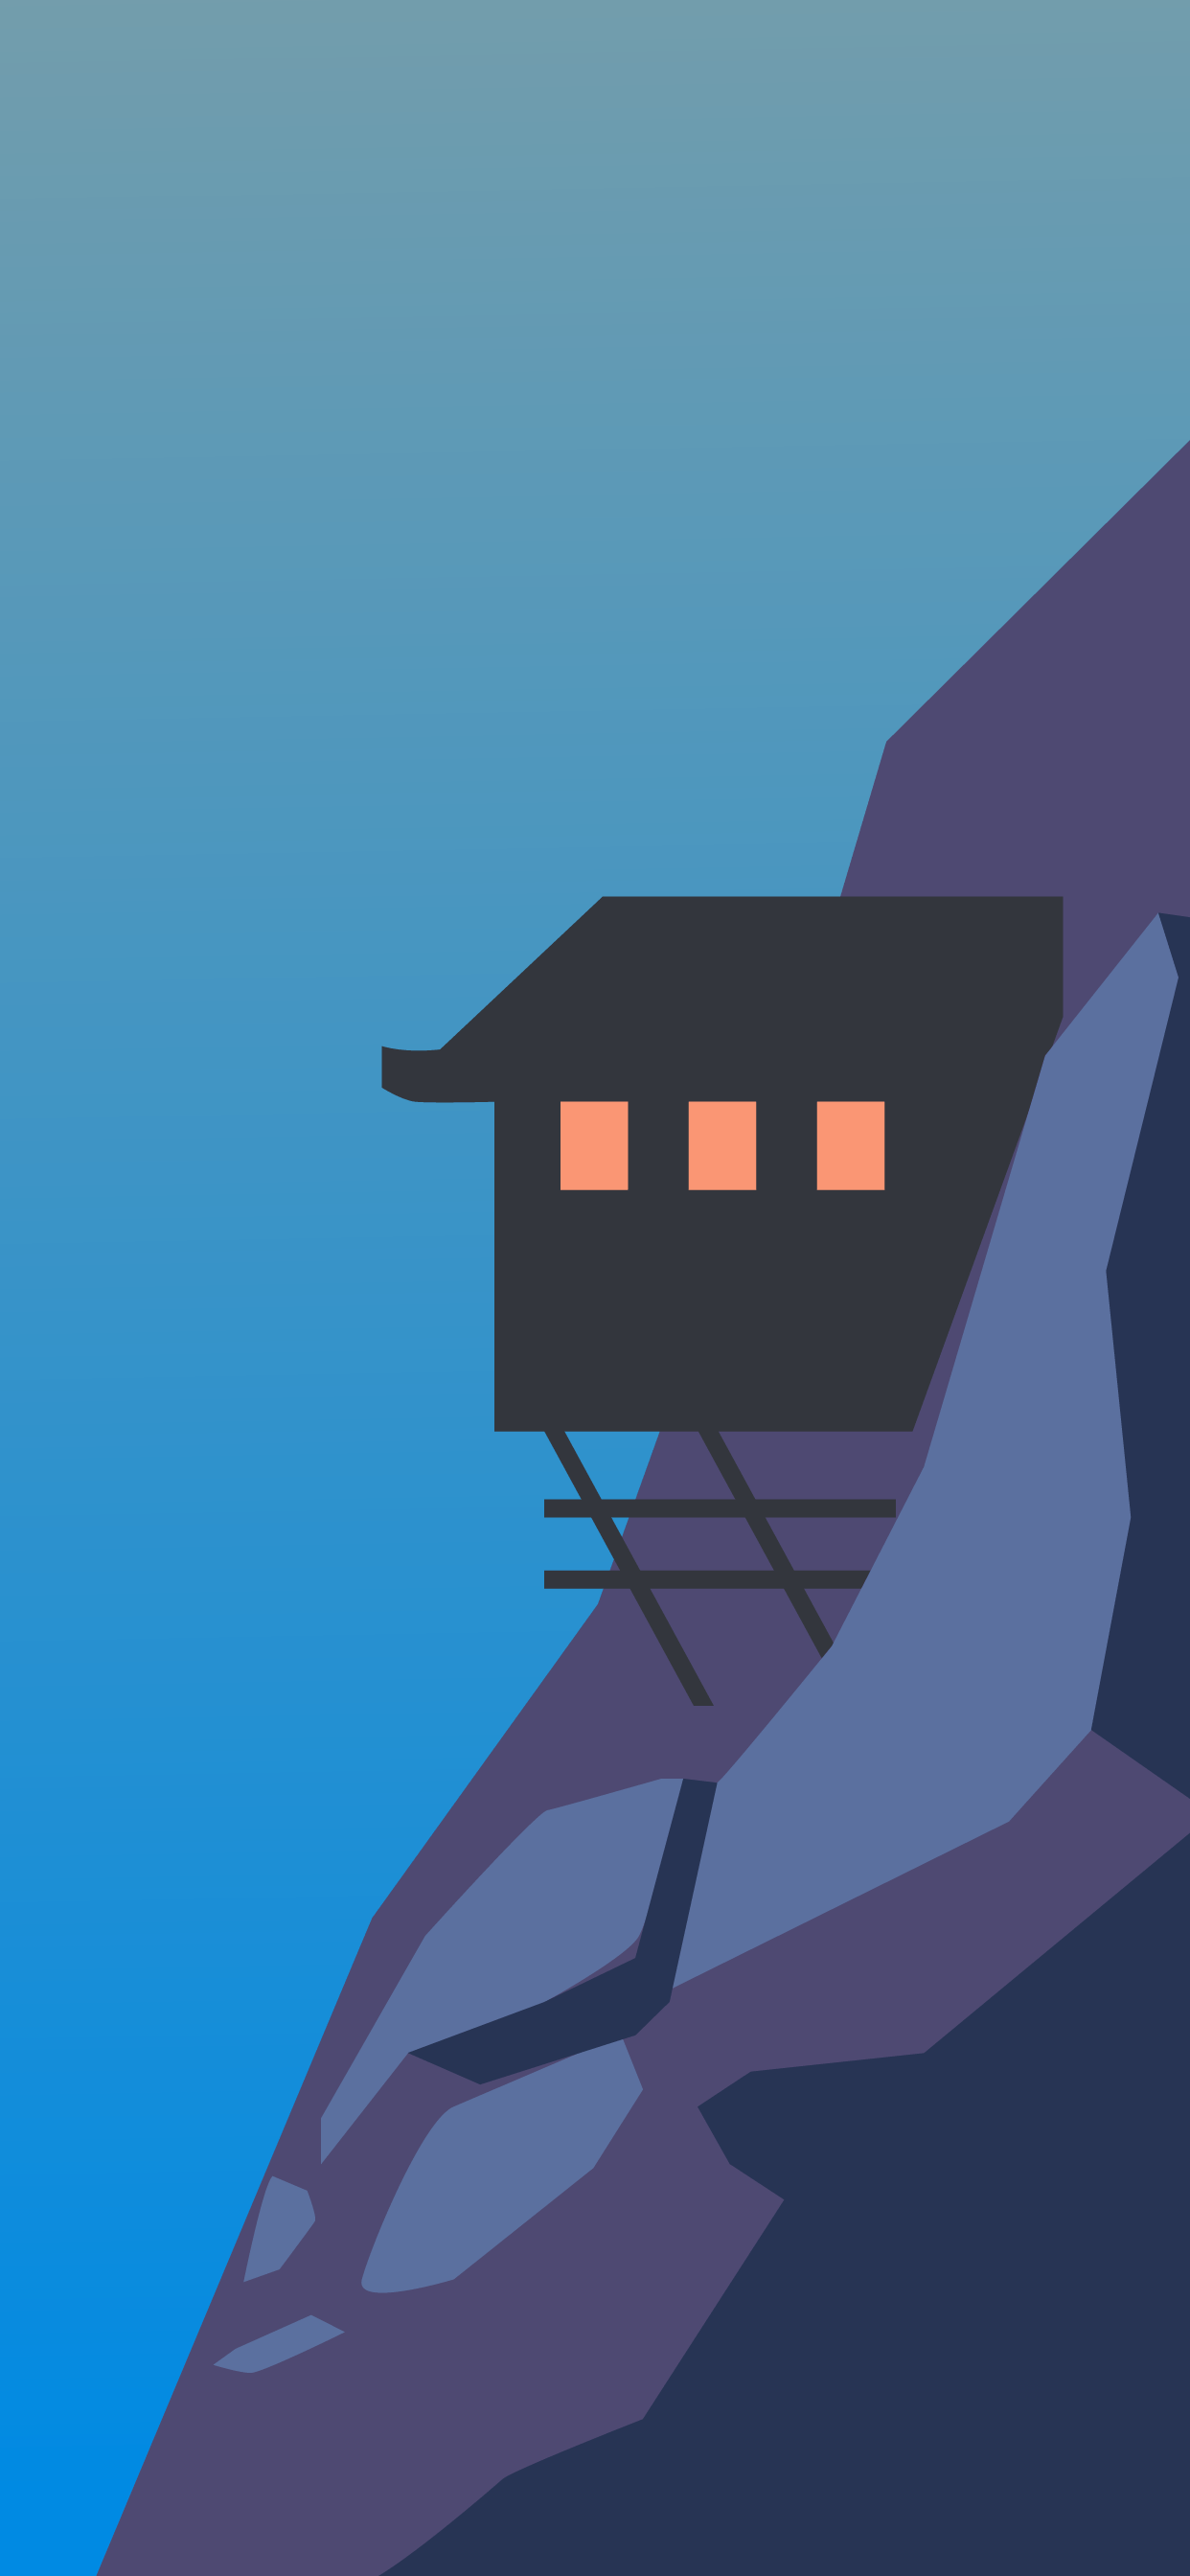 A black house on stilts sits on a purple mountain with a blue sky background - Minimalist